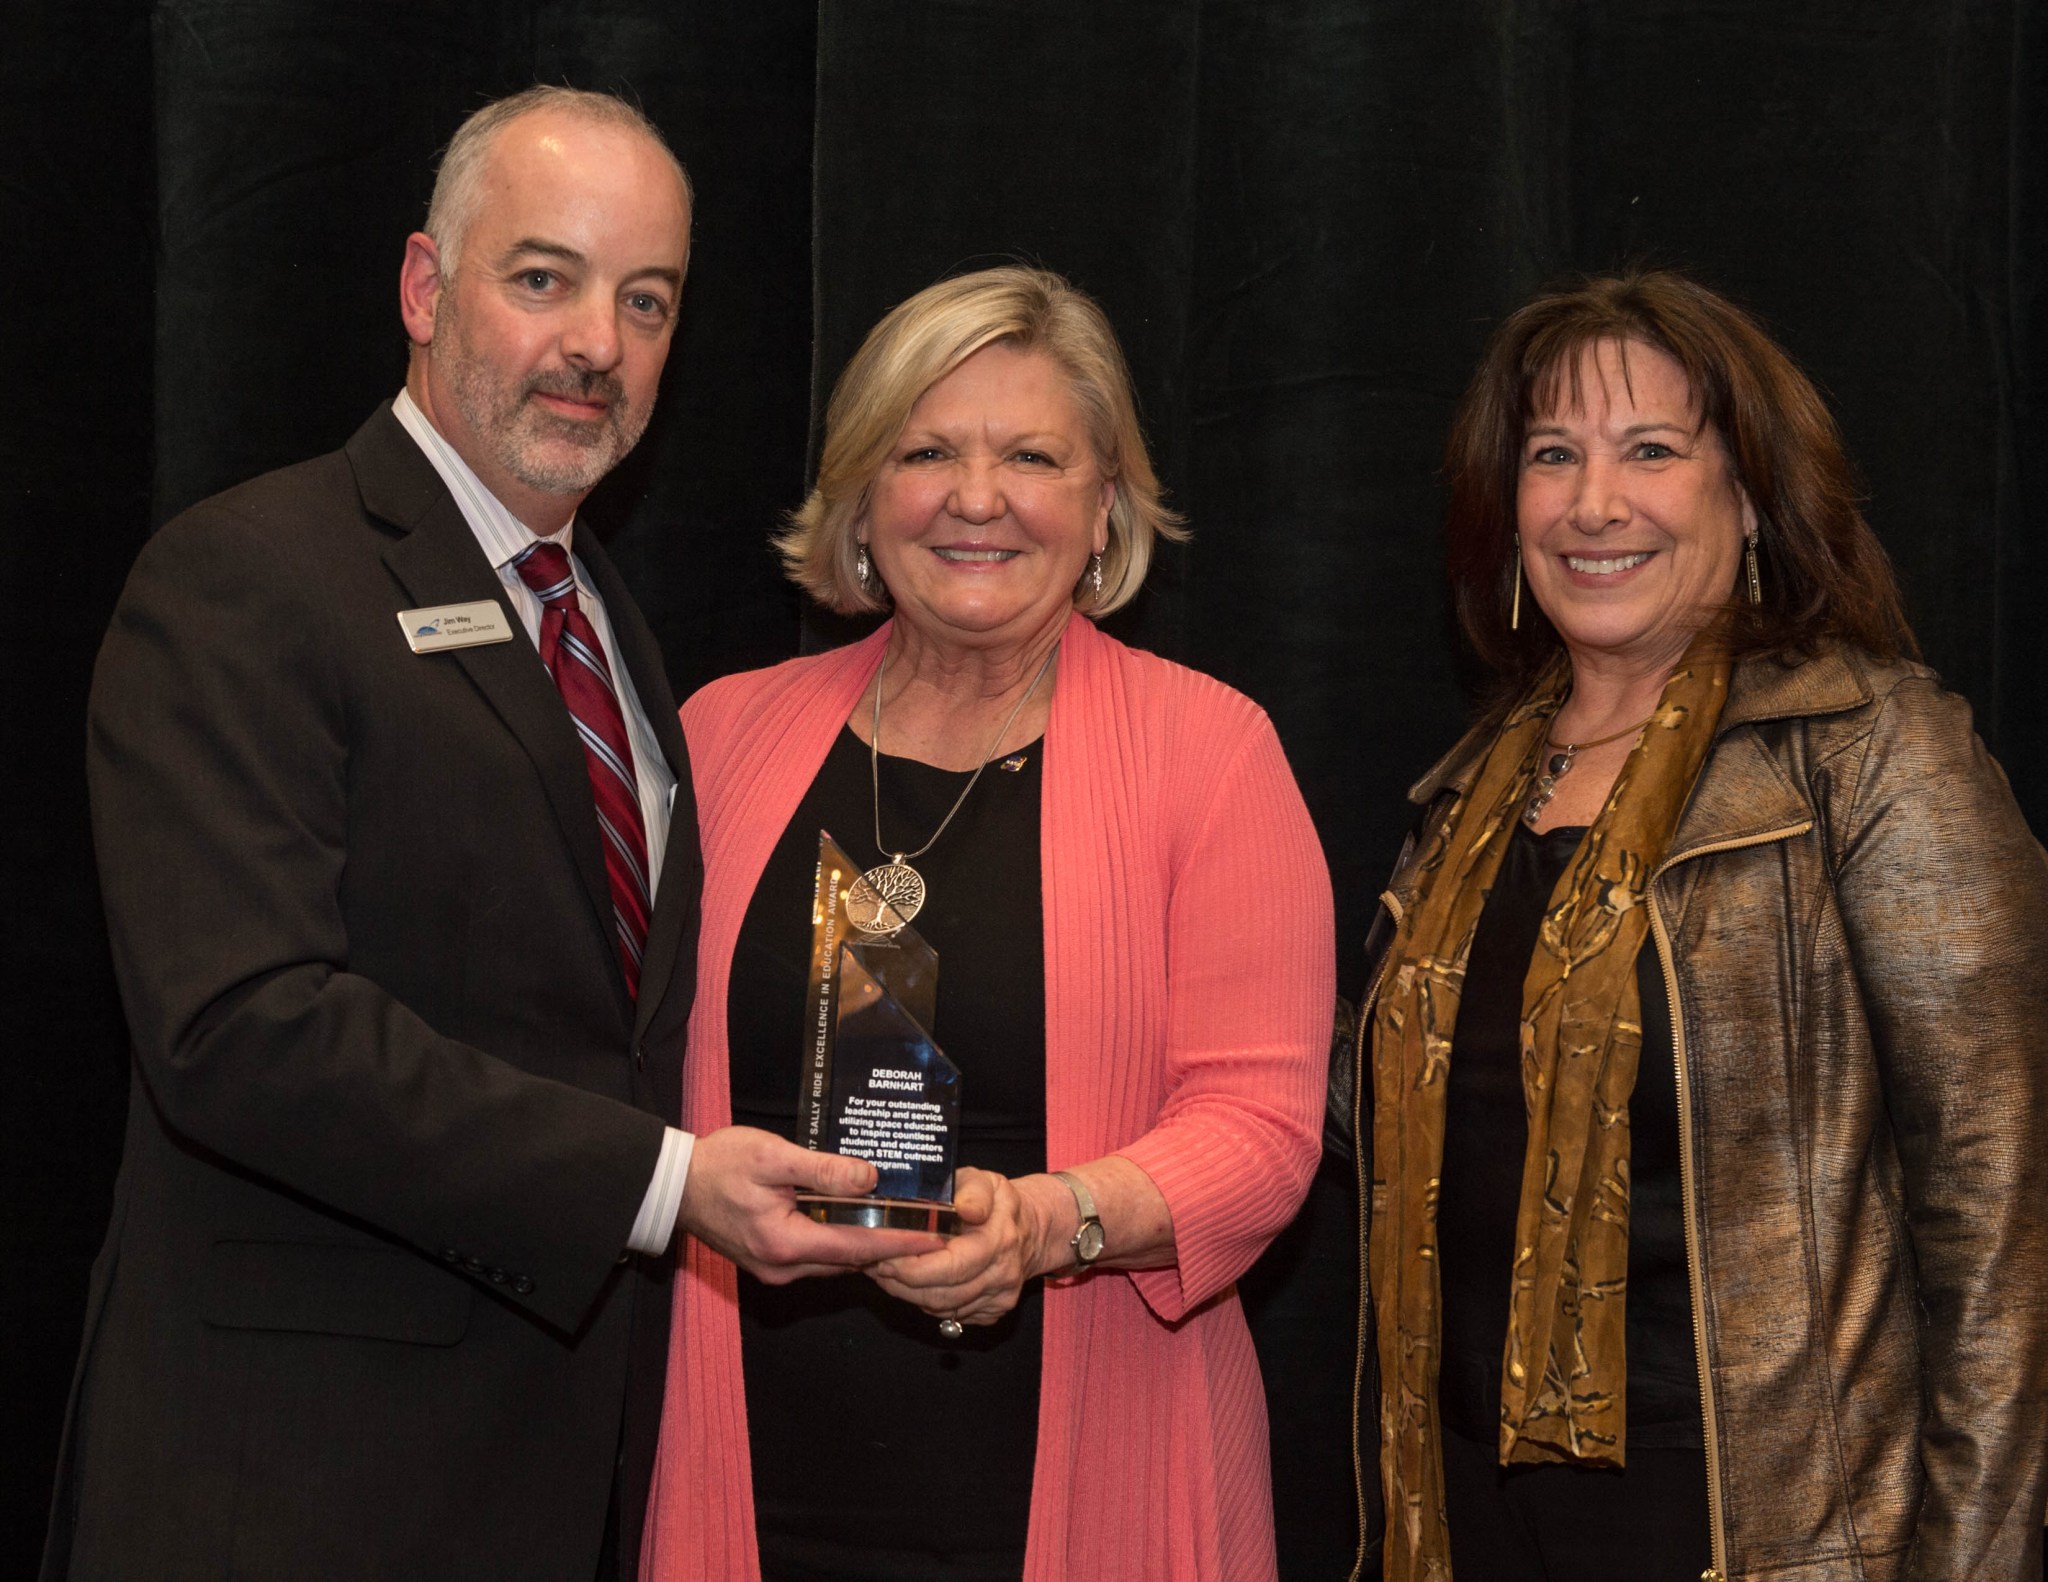 Deborah Barnhart, center, received the American Astronautical Society's 2017 Sally Ride Excellence in Education Award.